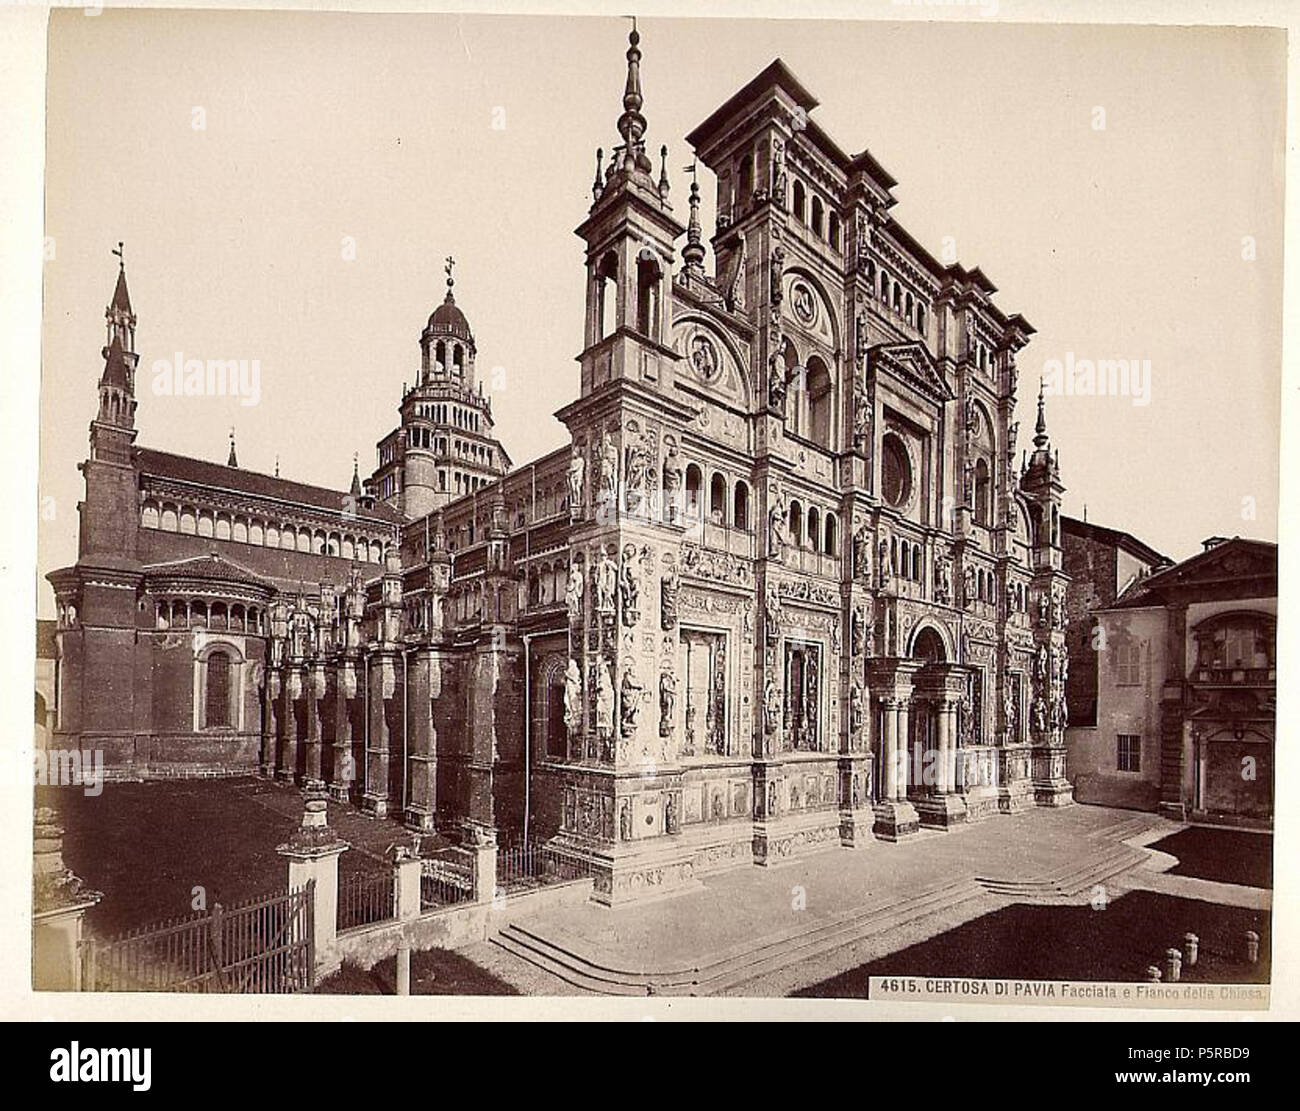 N/A. Italian photographer N/A 240 Brogi, Giacomo (1822-1881) - n. 4615 - Certosa di Pavia - Facciata e fianco della Chiesa - 1880s Stock Photo